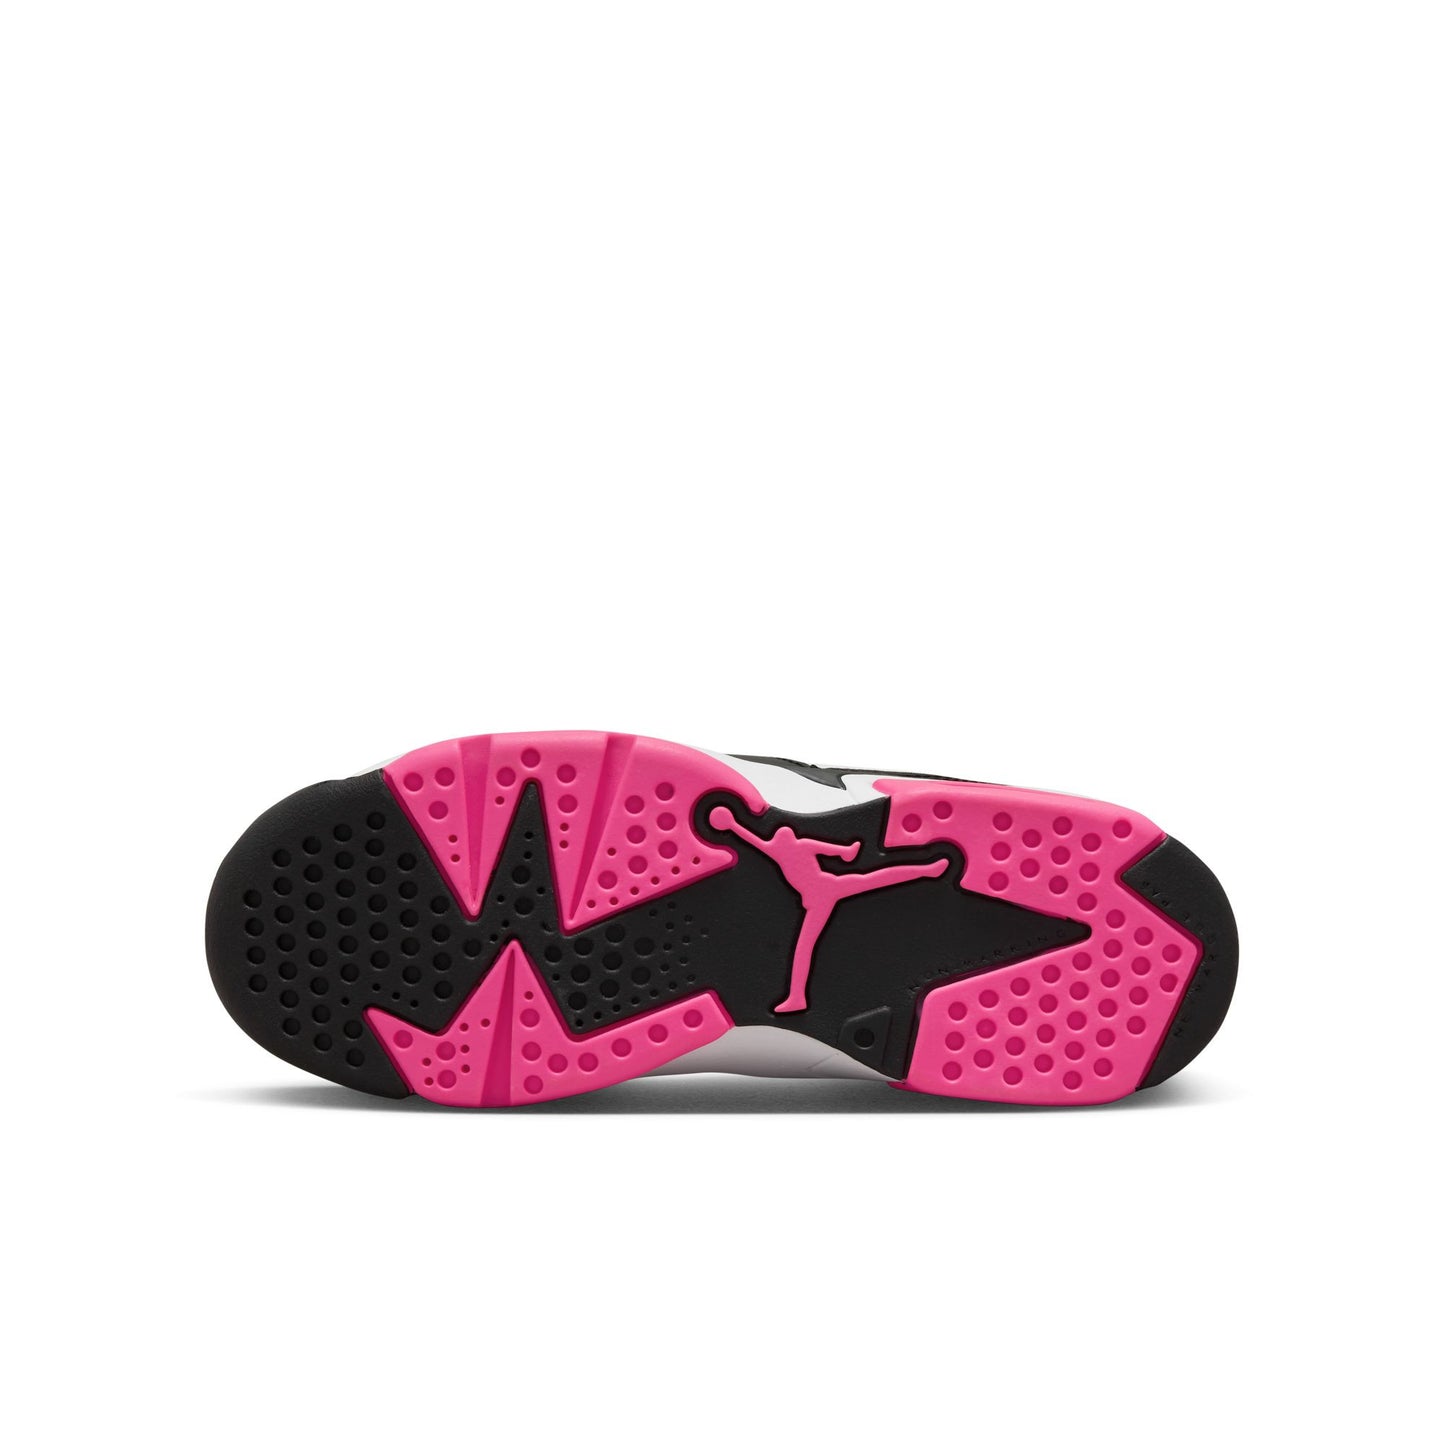 Air Jordan 6 Retro Low (GS) "Fierce Pink" - 768878-061